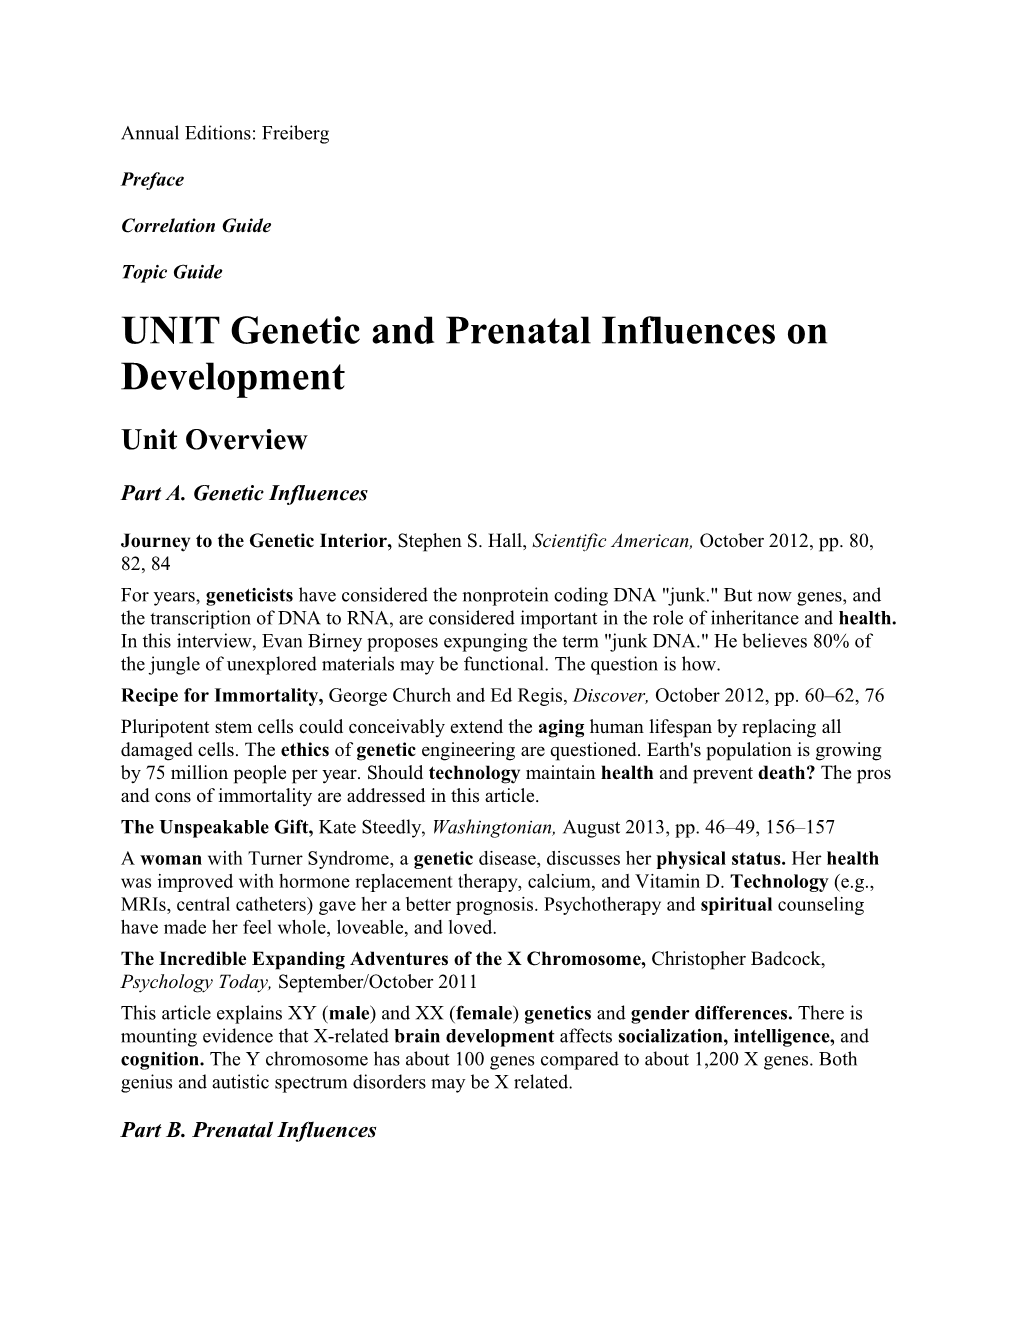 UNIT Genetic and Prenatal Influences on Development